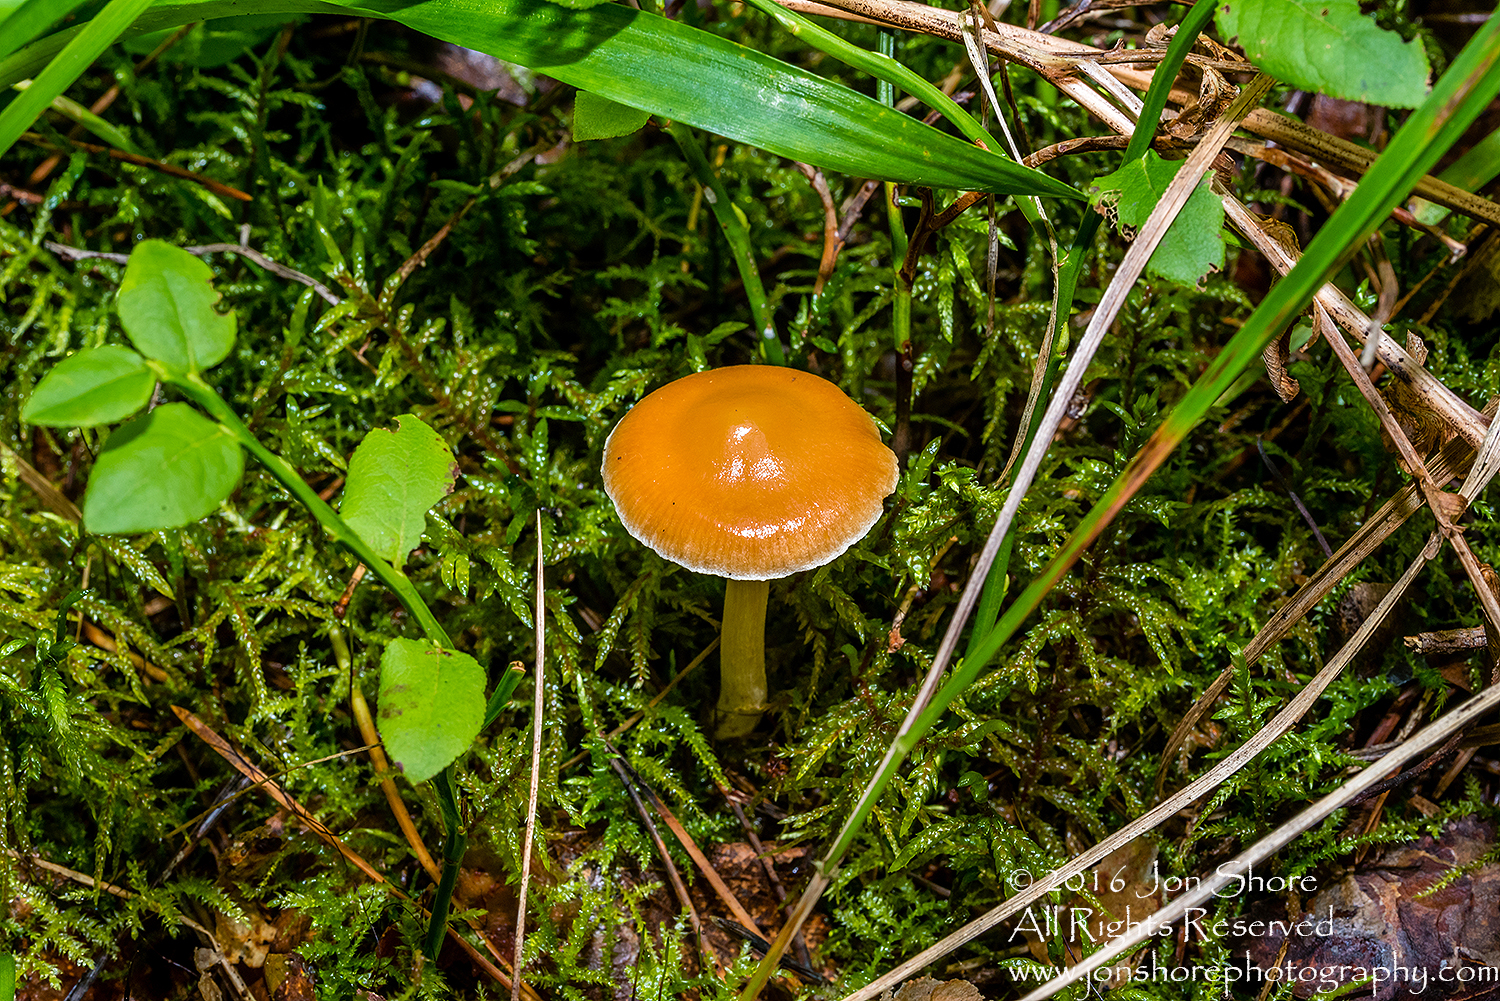 Wild Mushroom Close-up - Latgale, Latvia. Tamron 90mm Macro lens